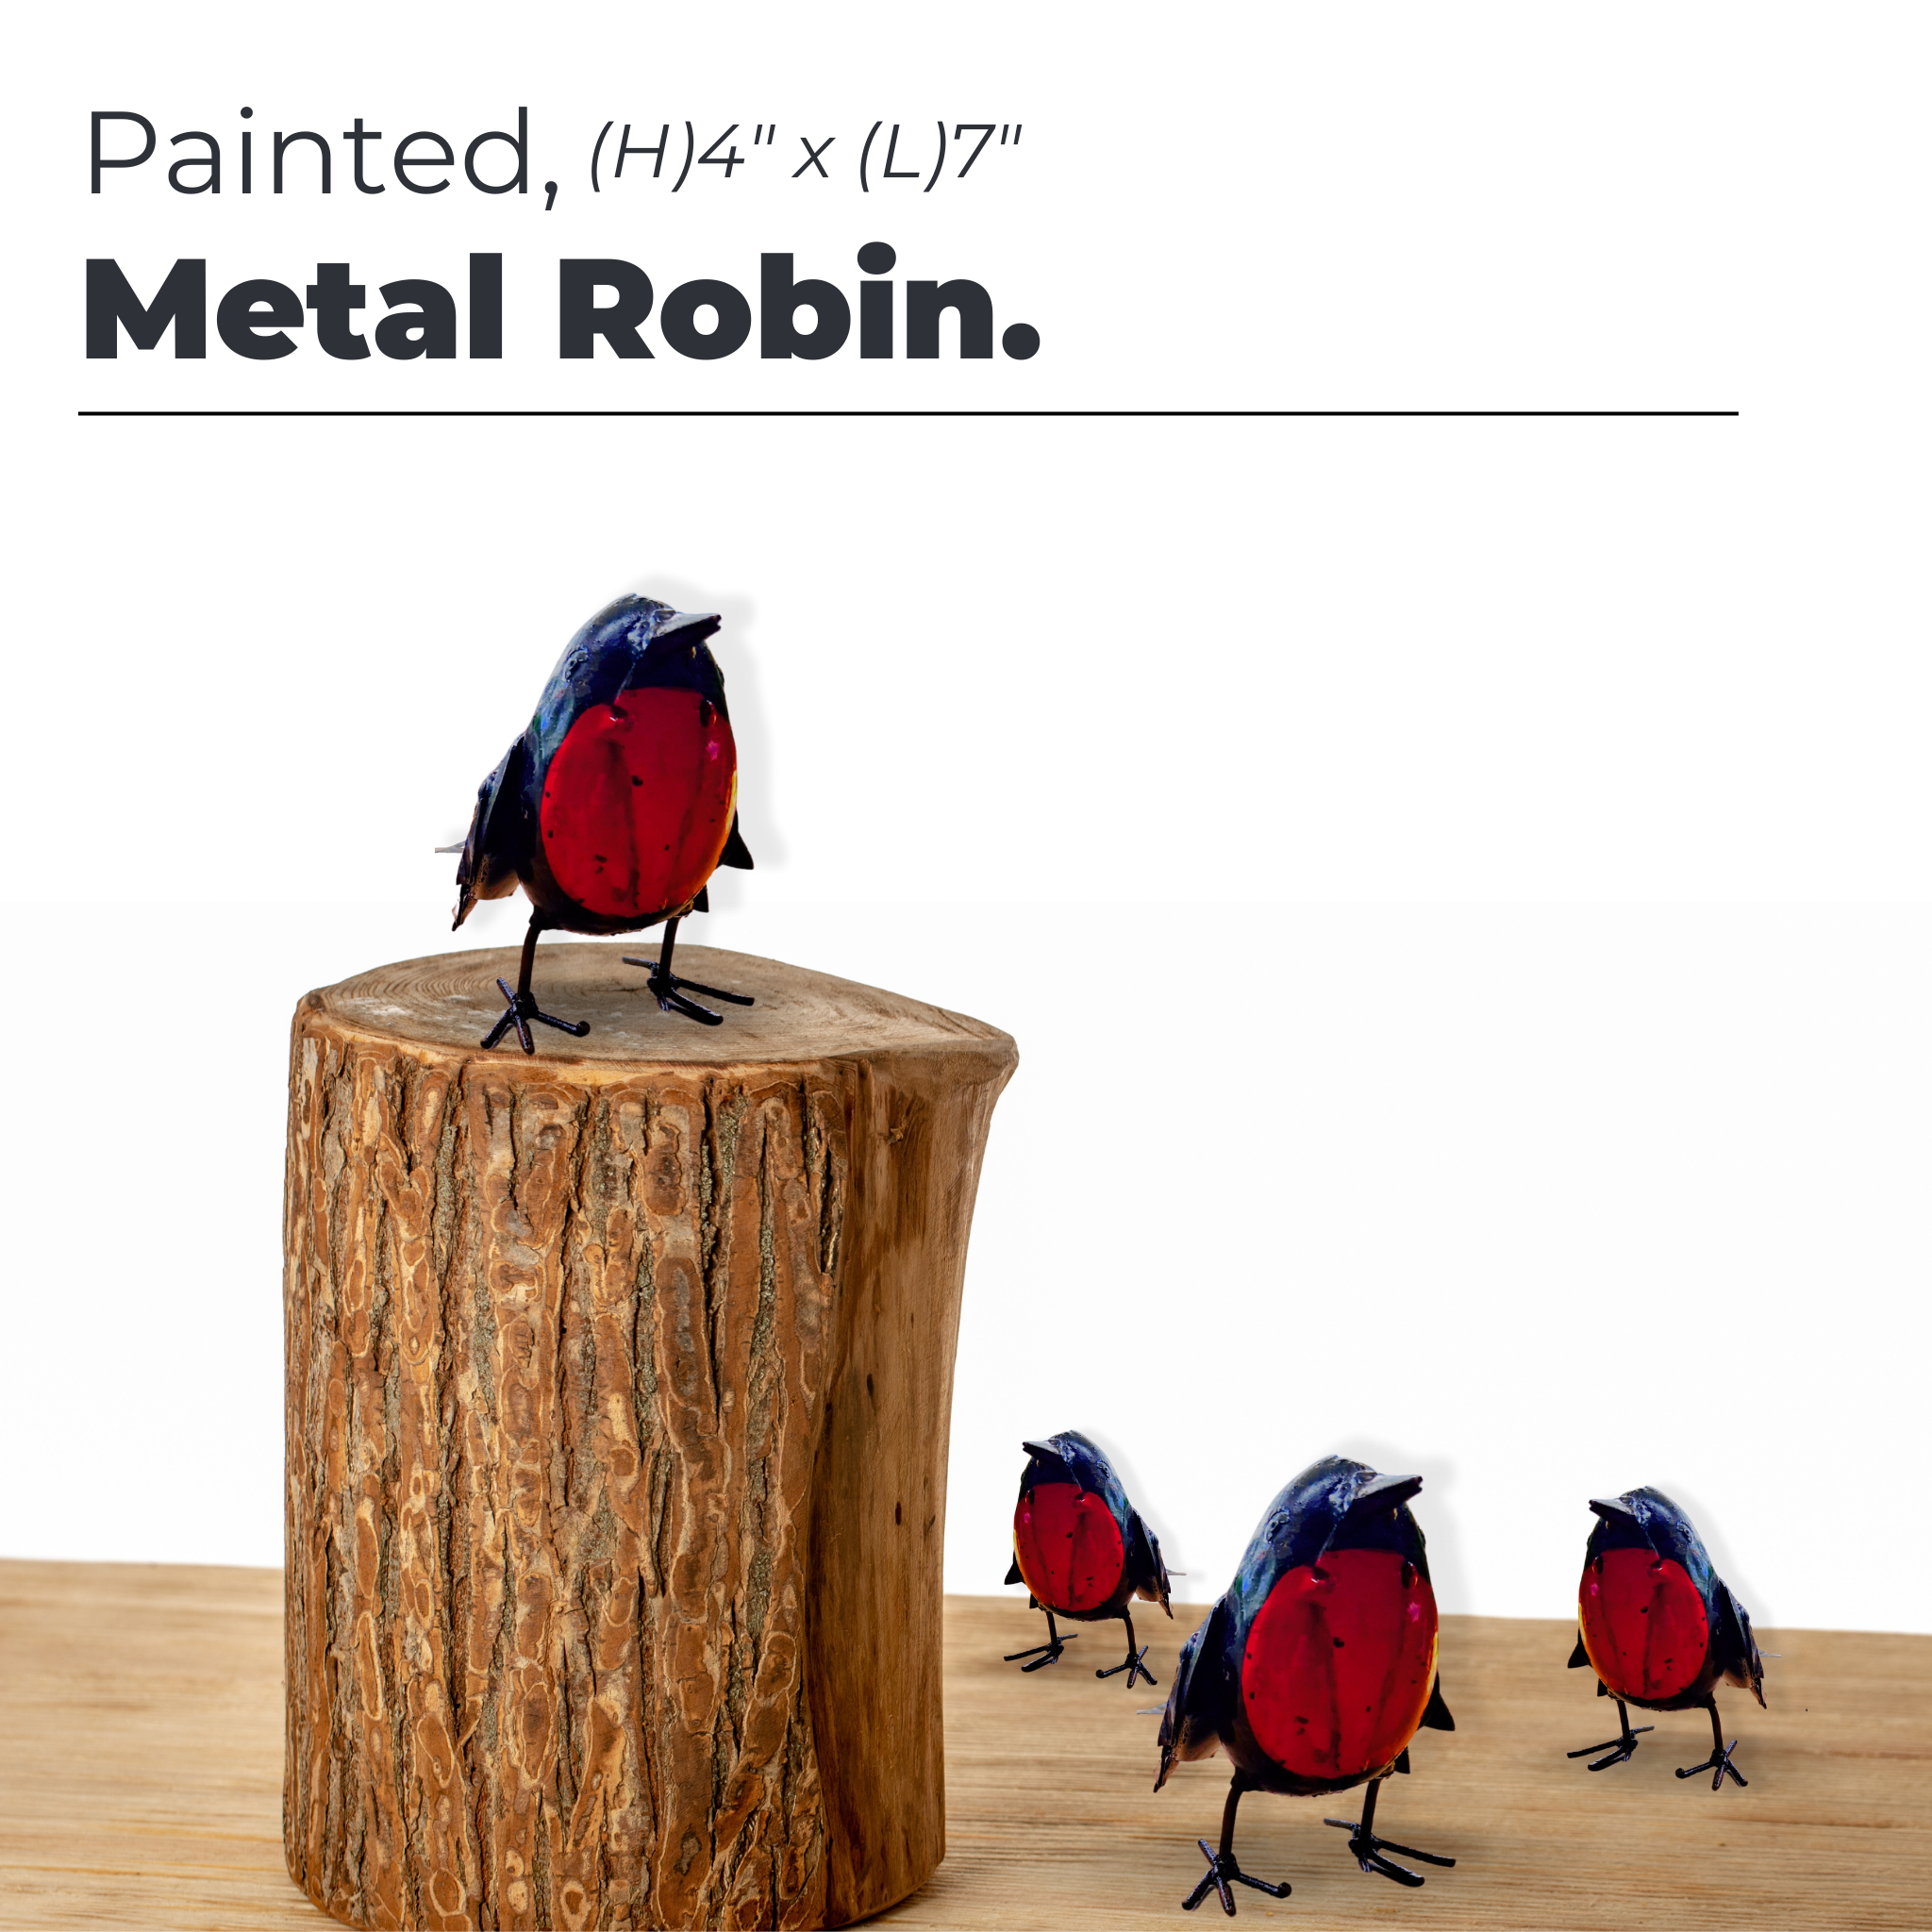 Painted Robin Metal Sculpture